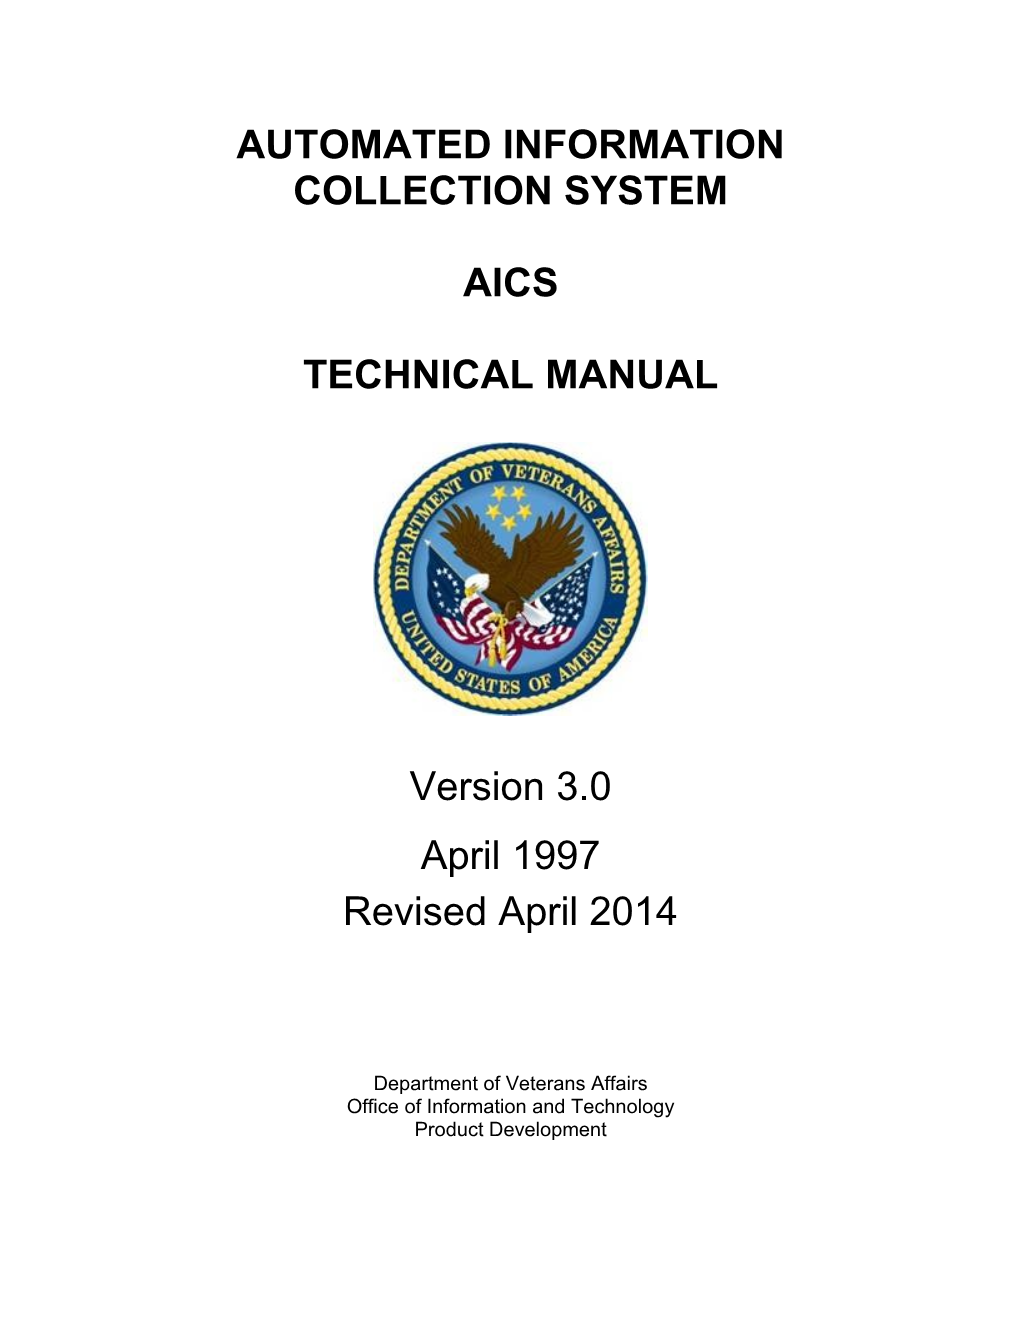 AICS Technical Manual